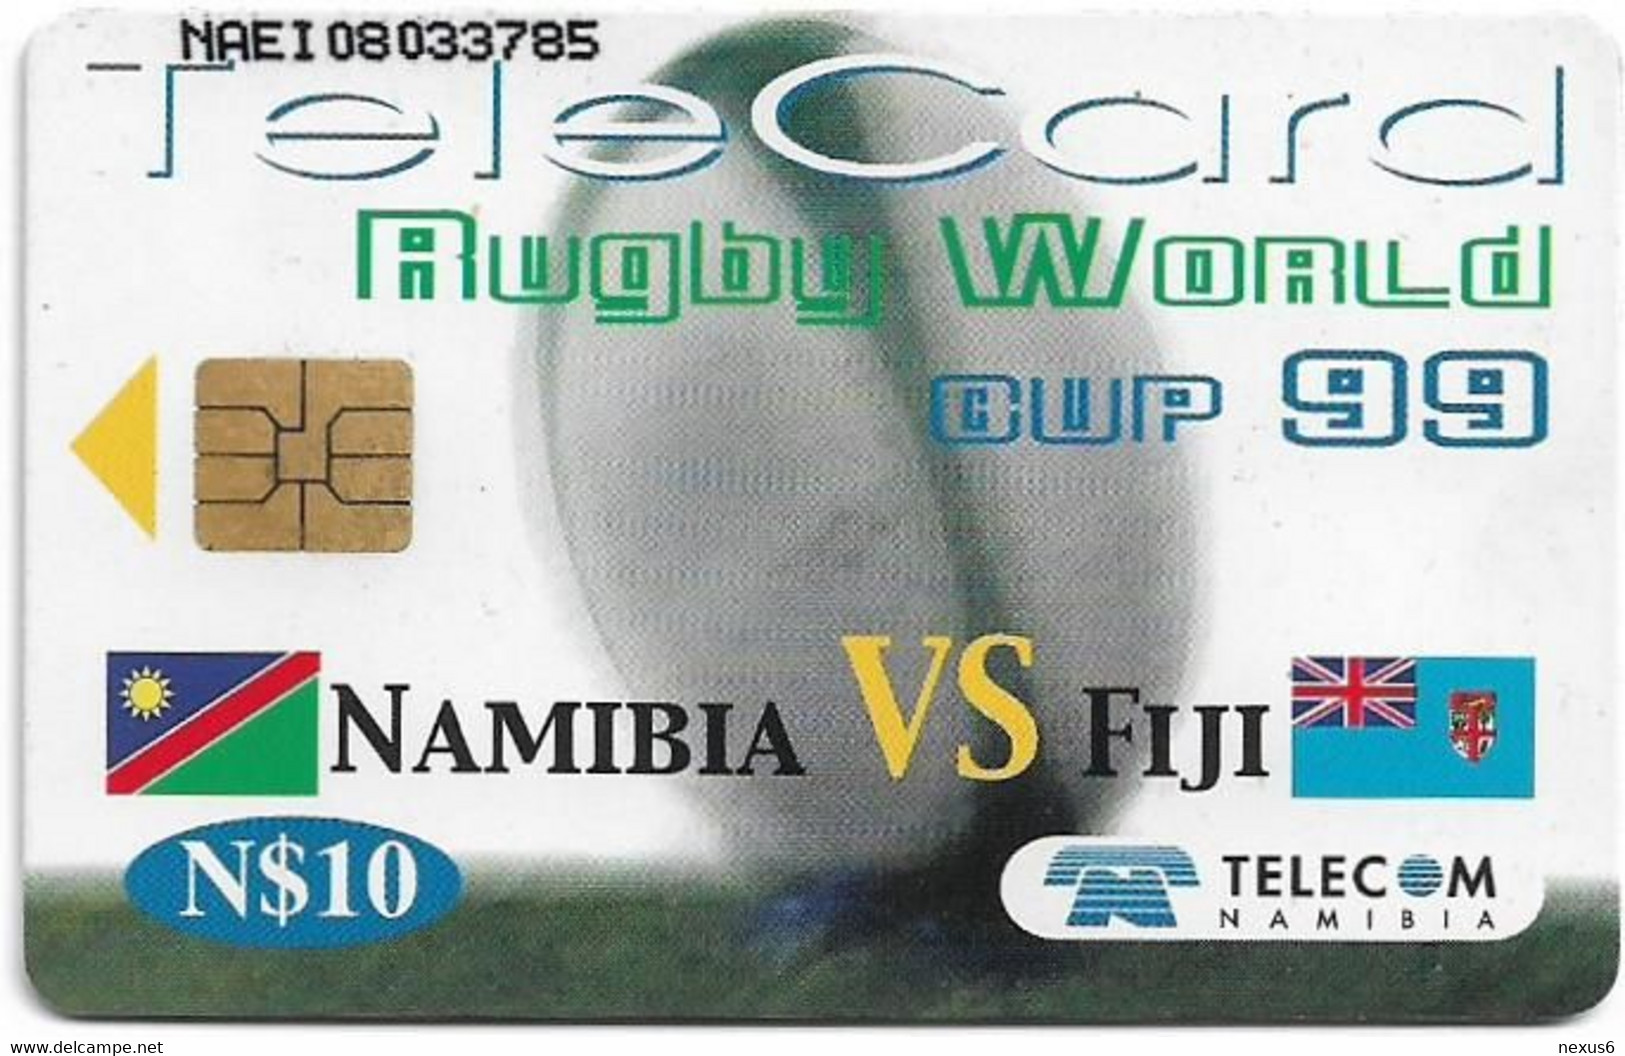 Namibia - Telecom Namibia - Rugby World Cup '99, Namibia VS Fiji - 10$, 1999, Used - Namibie